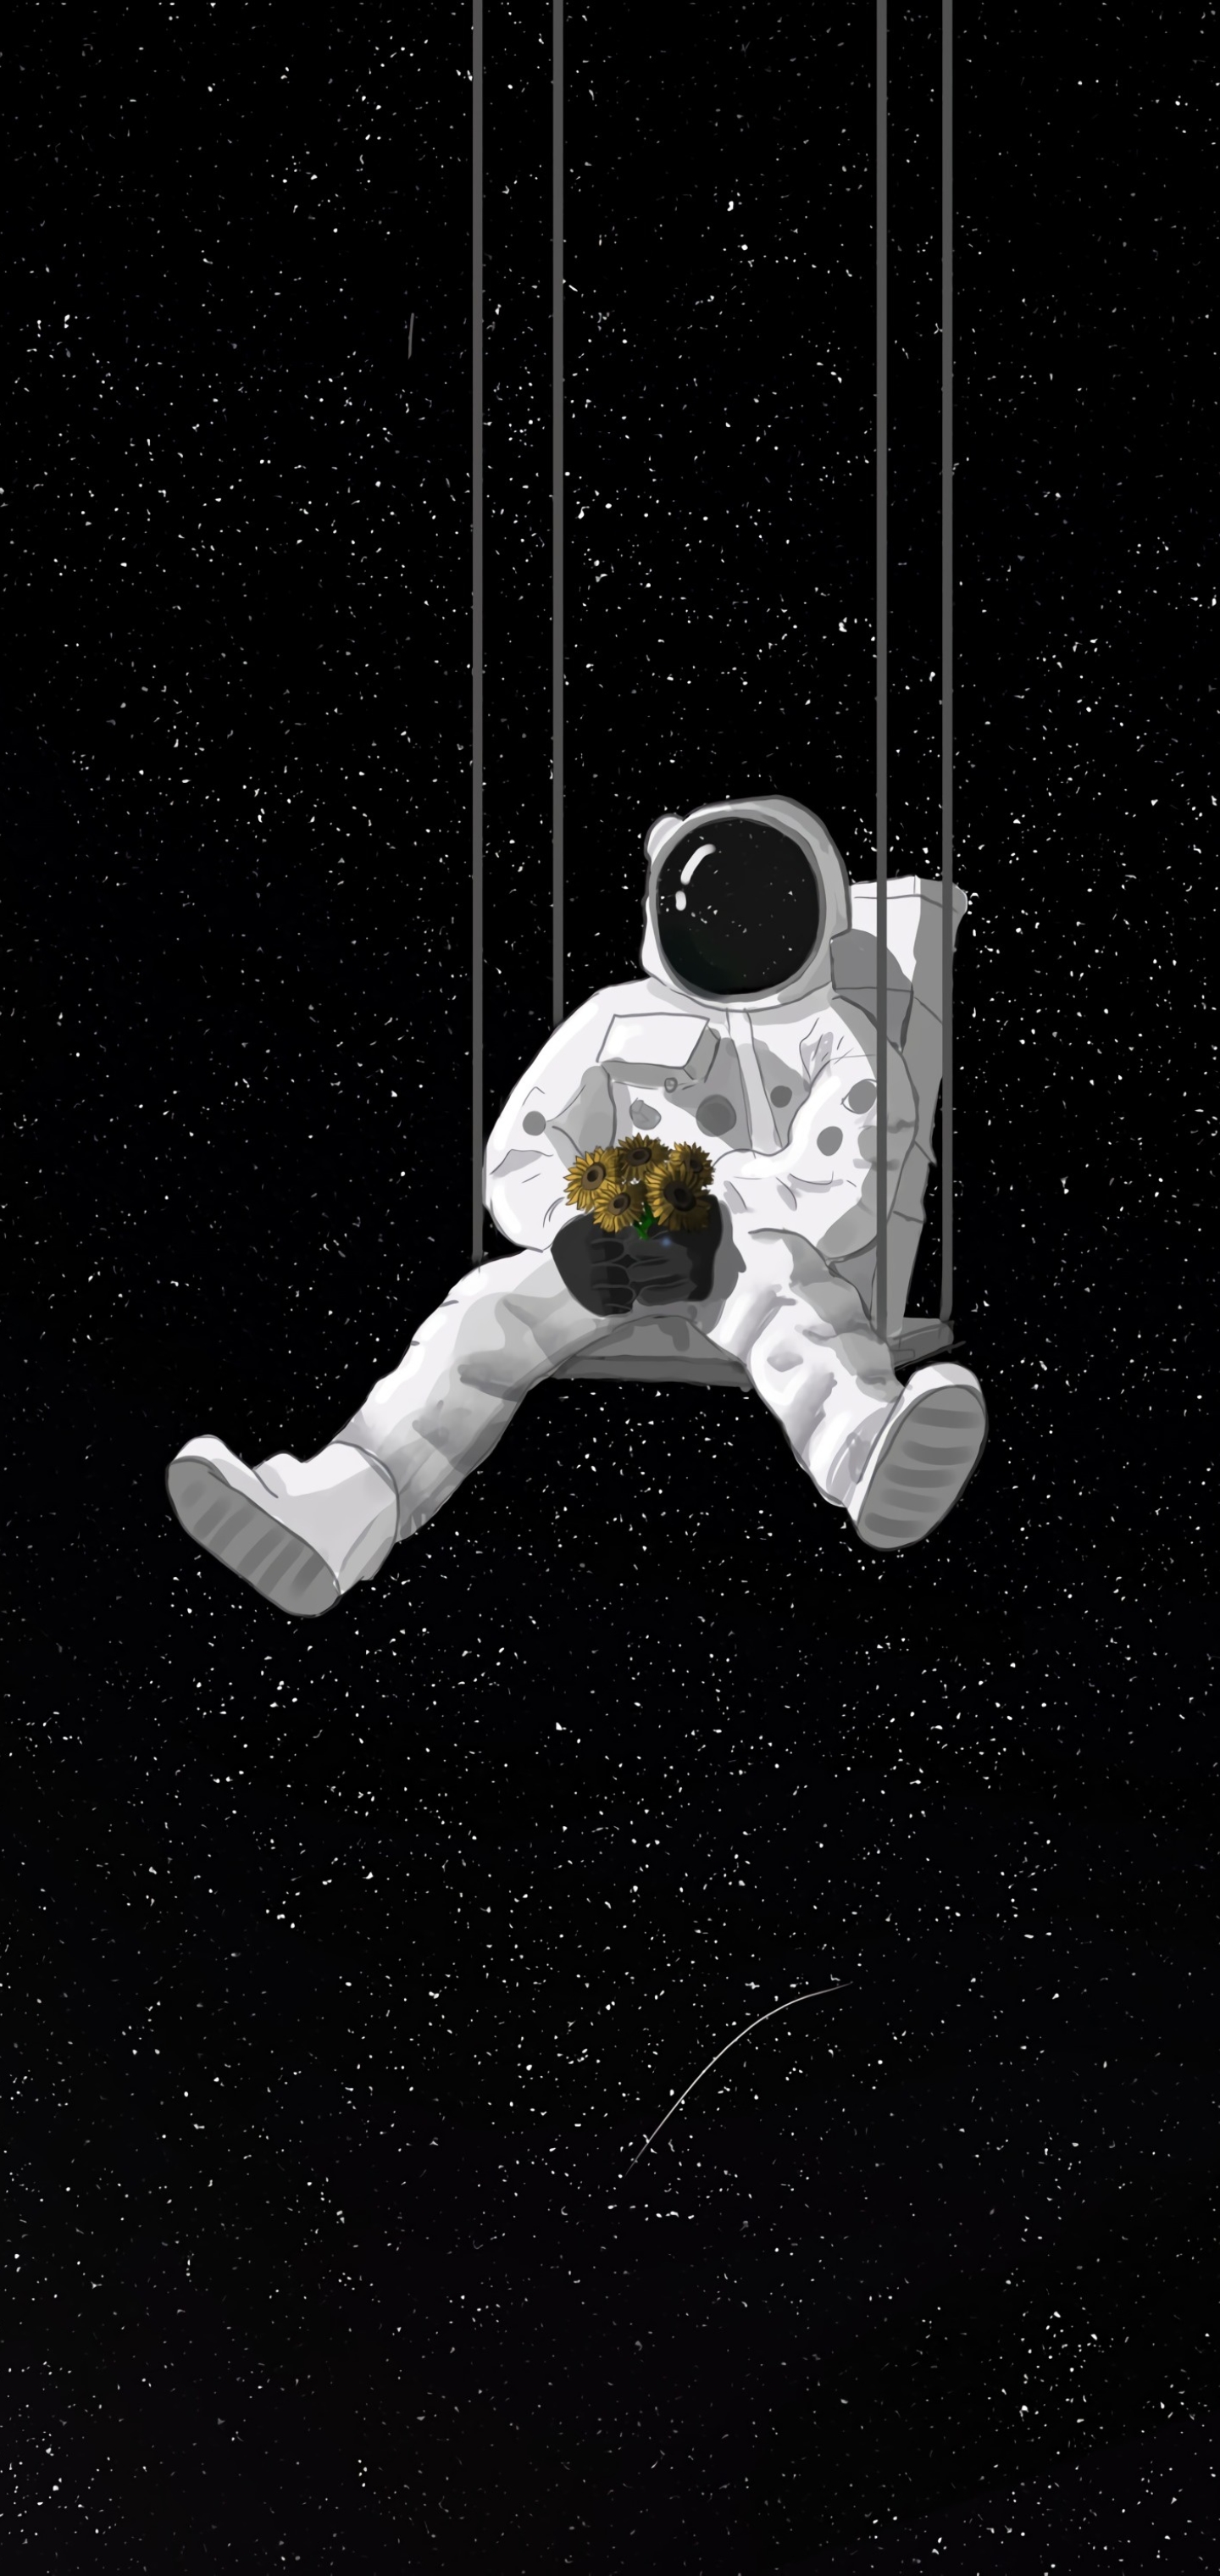 Astronaut Wallpaper Images - Free Download on Freepik